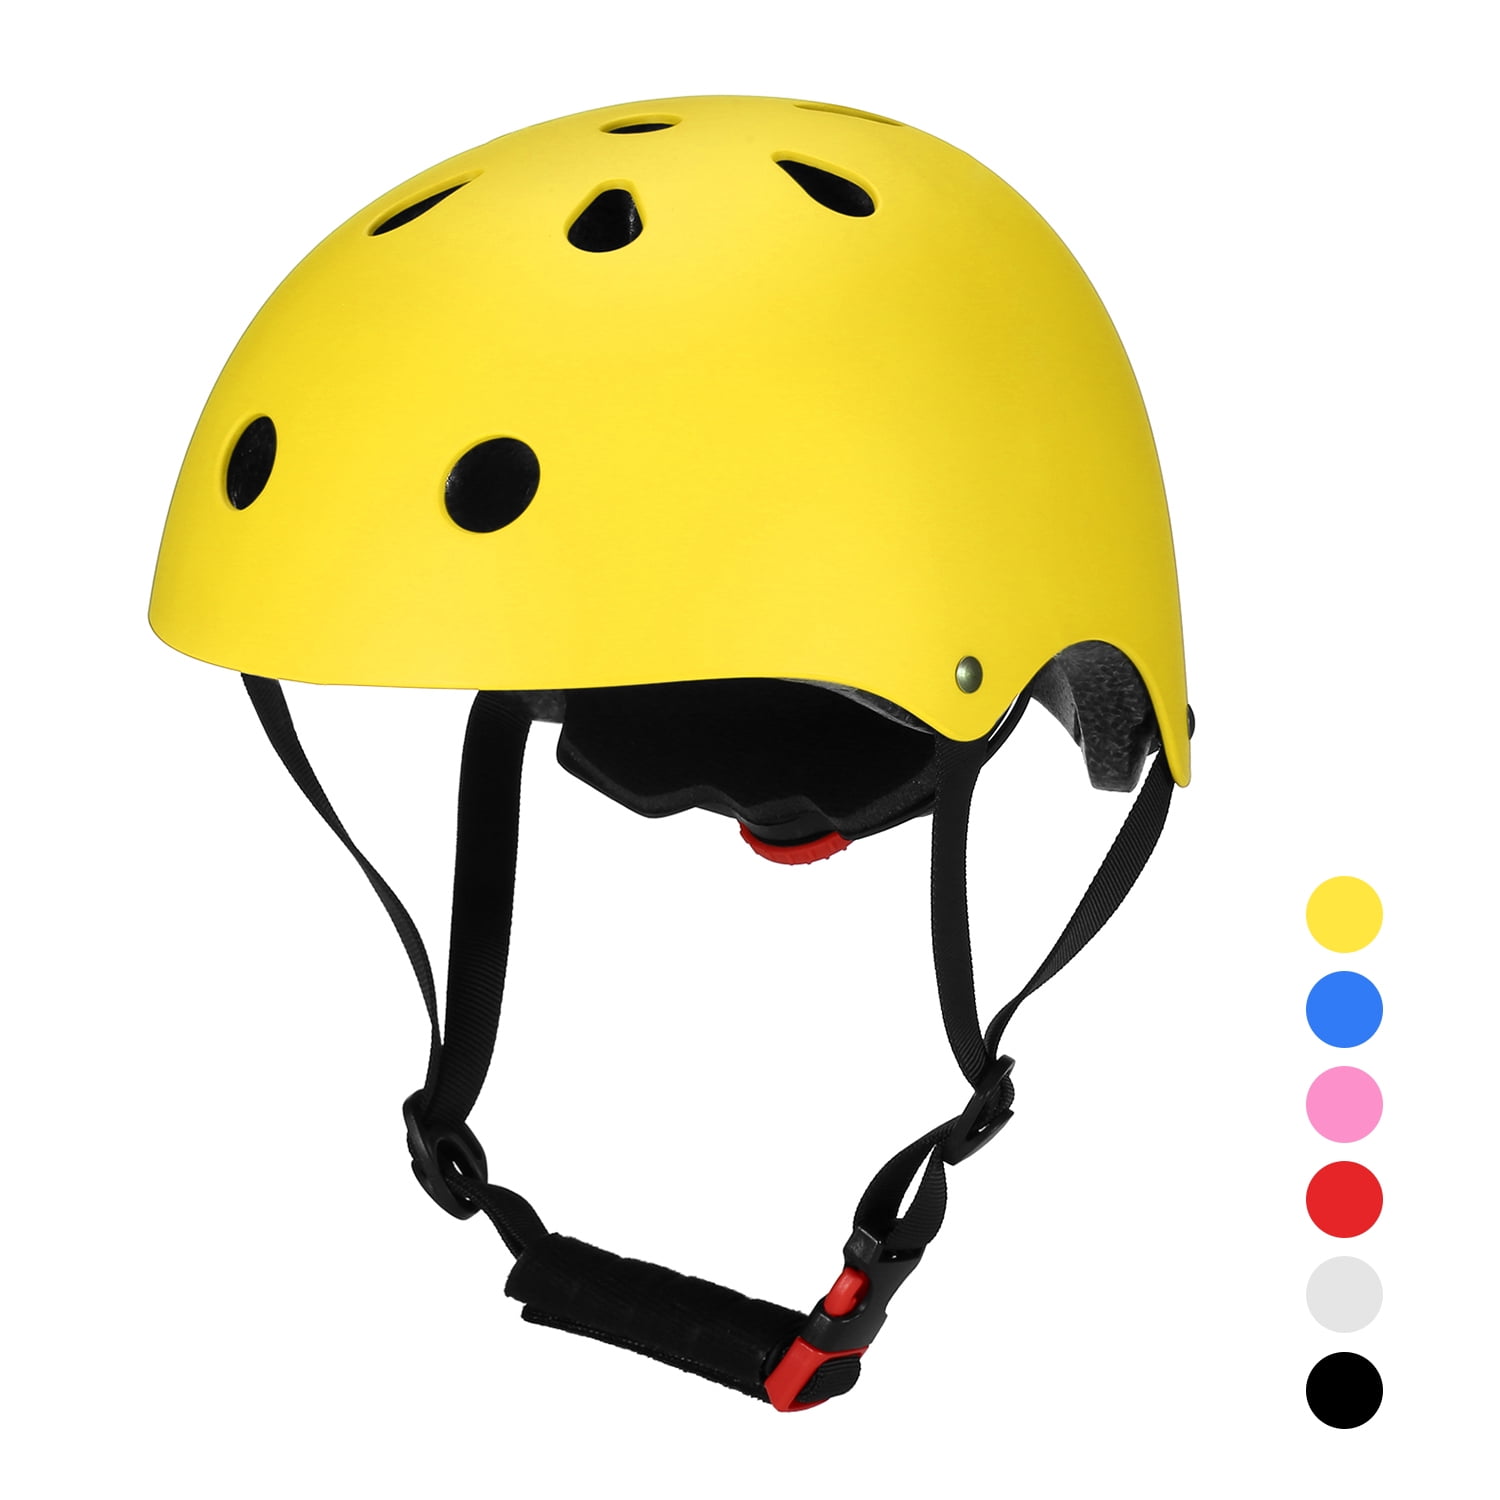 Tomshine Bicycle Helmet Multi-Sports Safety Helmet for Kids/Teenagers ...